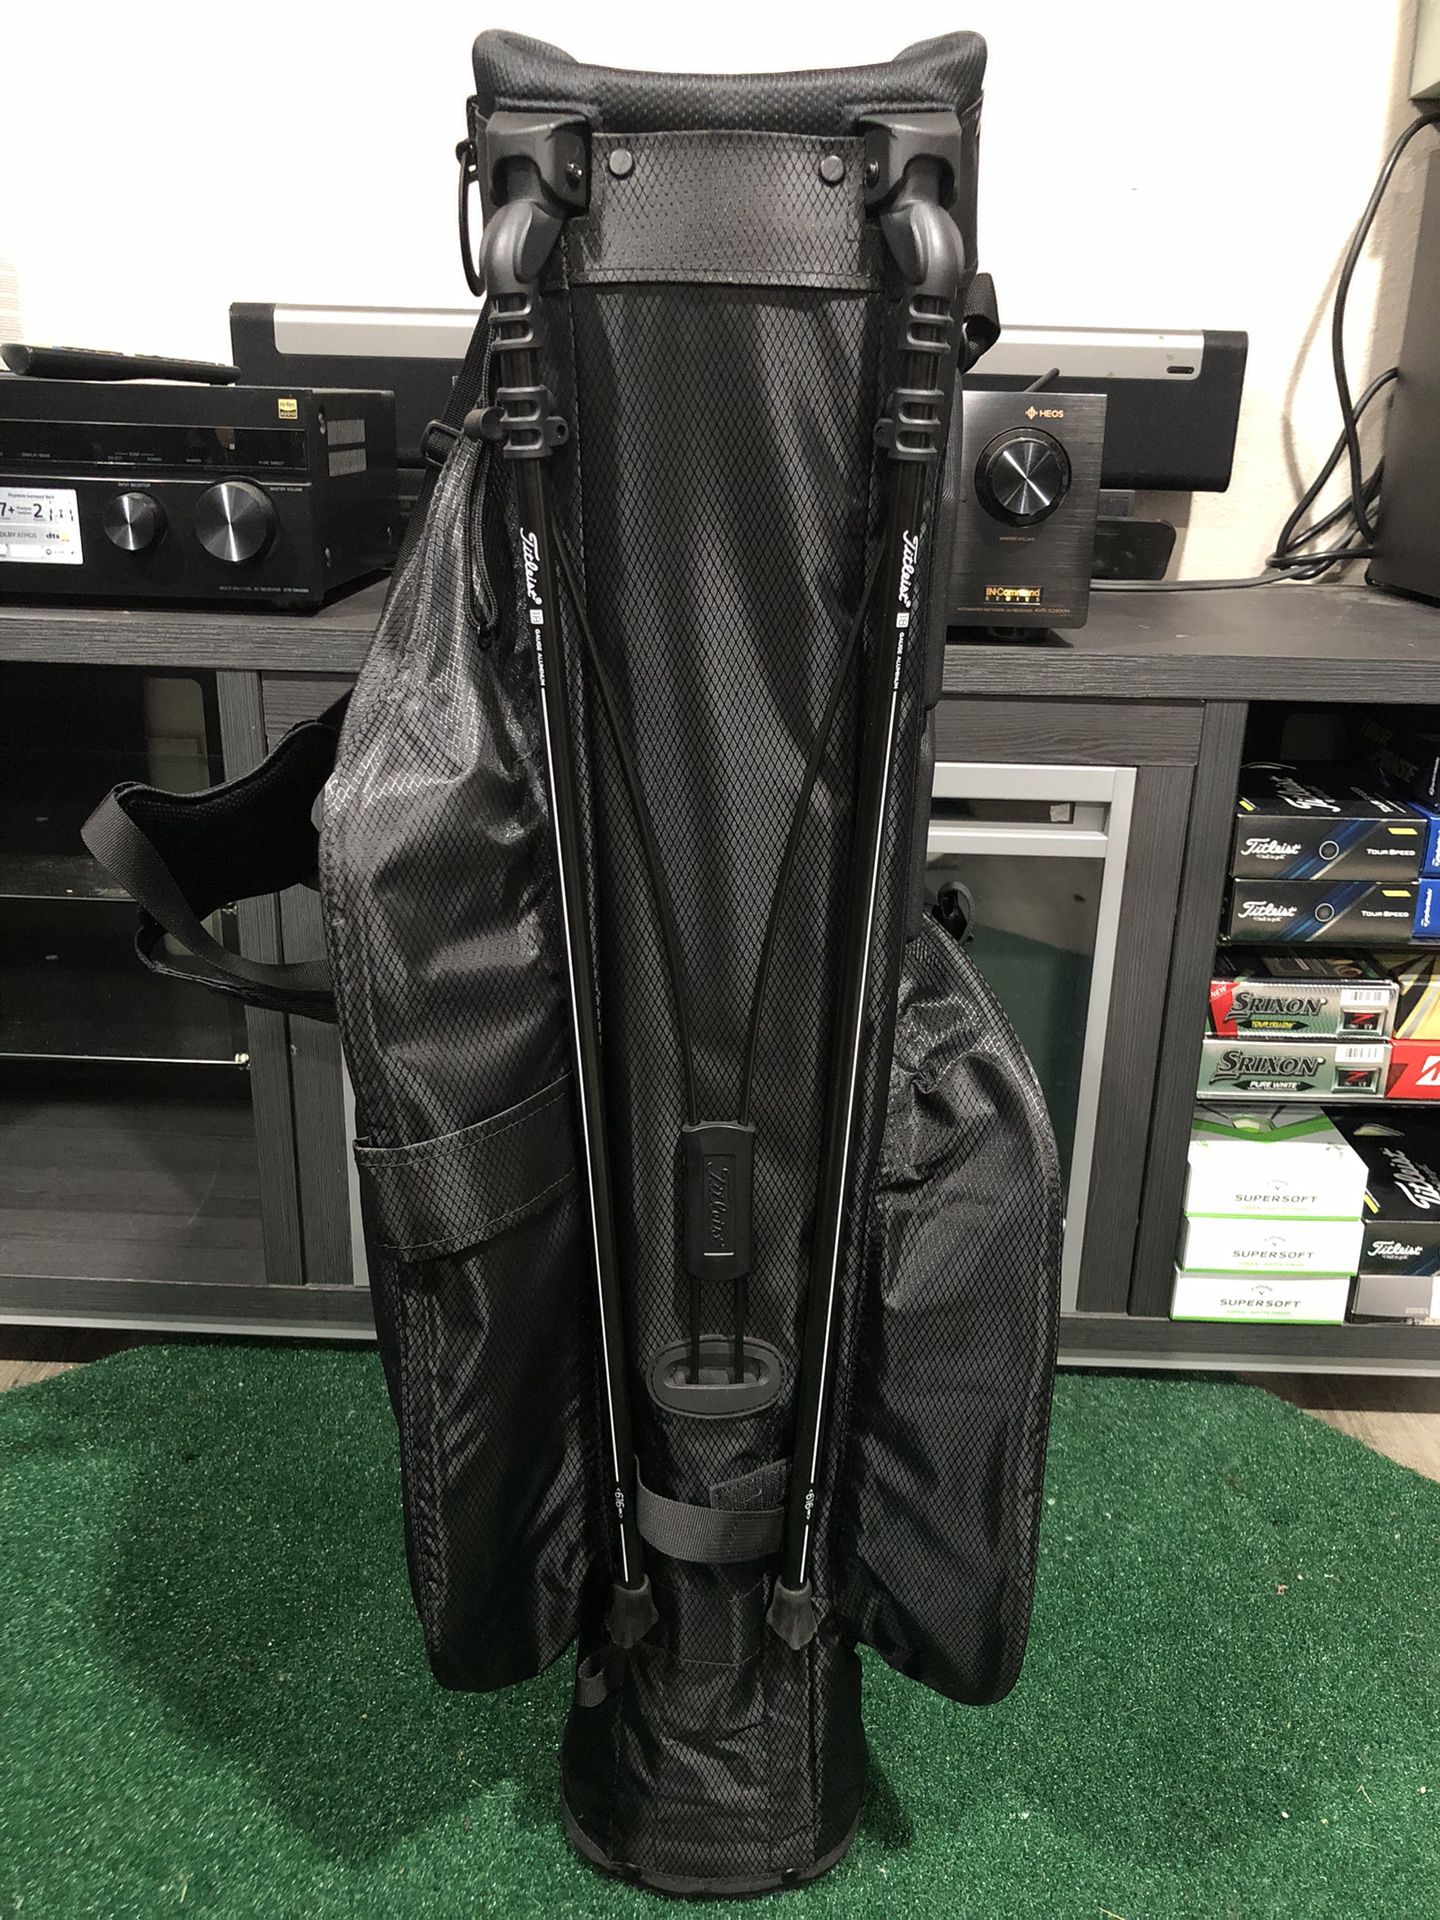 Vessel Golf Stand Bag for Sale in Glendora, CA - OfferUp